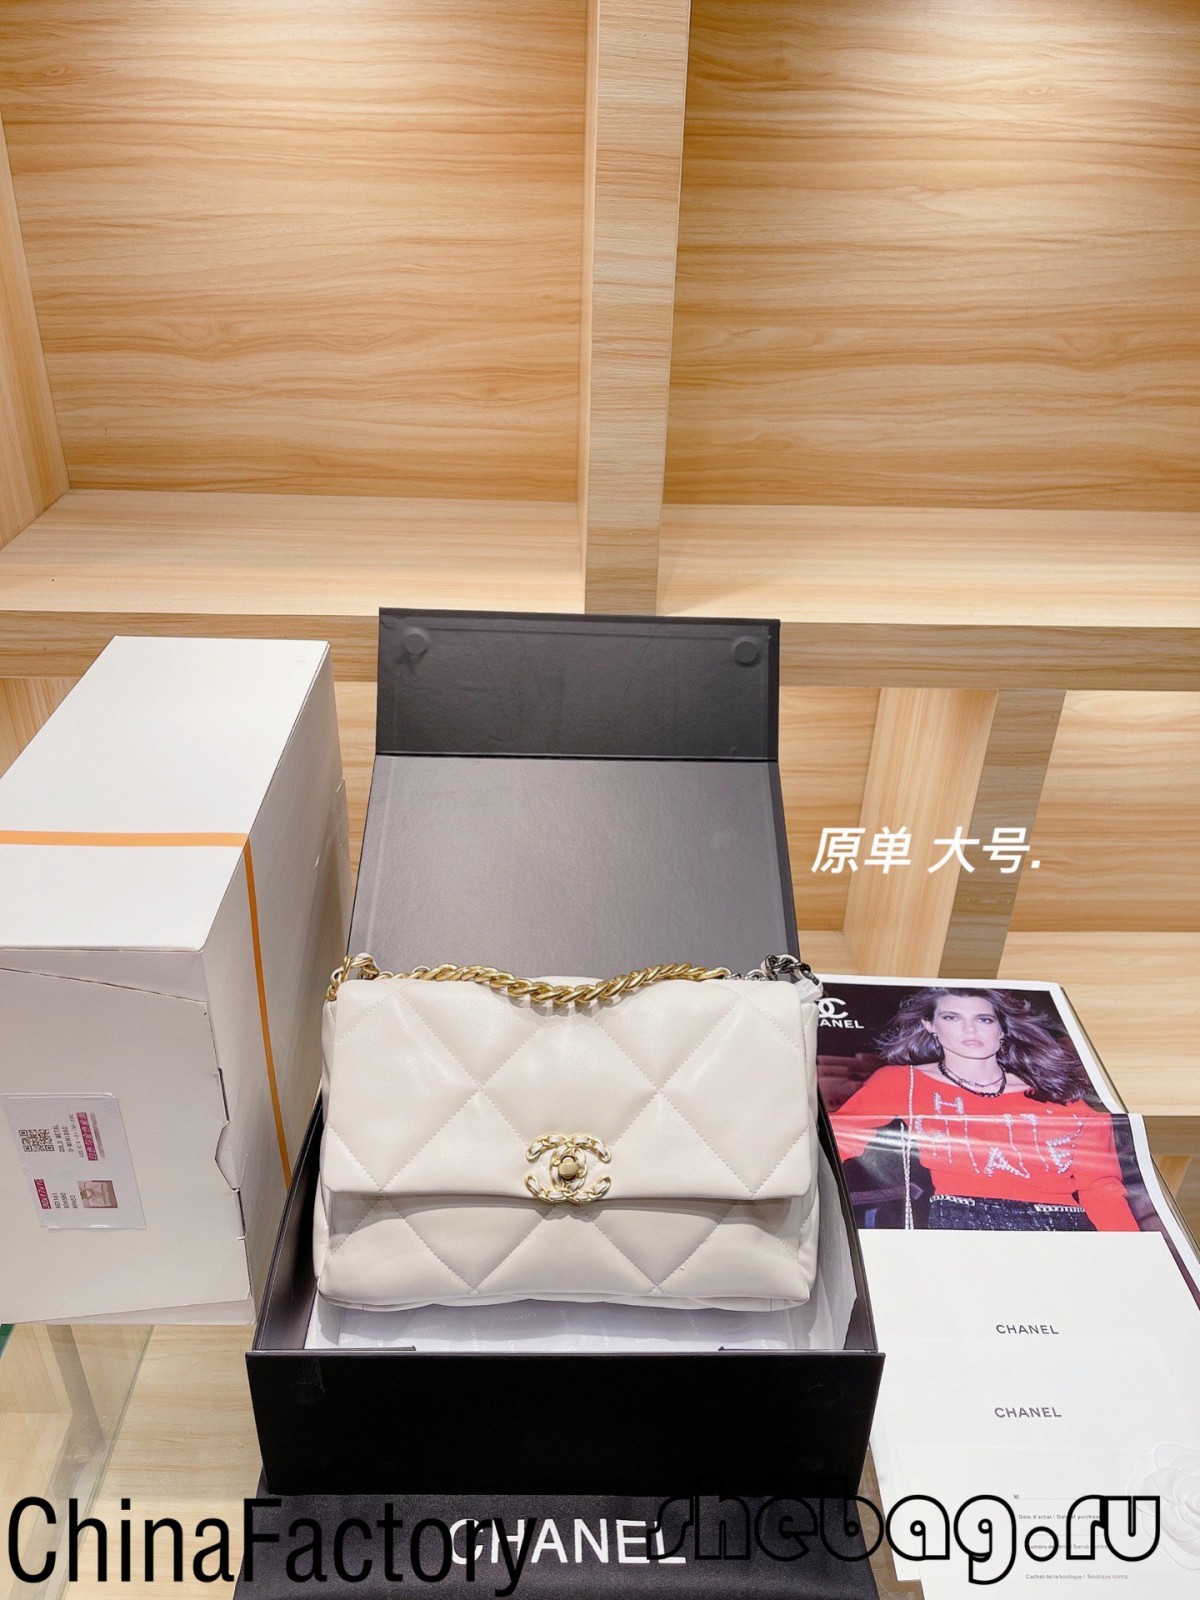 Aaa Chanel bag replica: Chanel 19 replica bag review (Yosinthidwa mu 2022)-Best Quality Fake Louis Vuitton Bag Online Store, Replica designer bag ru